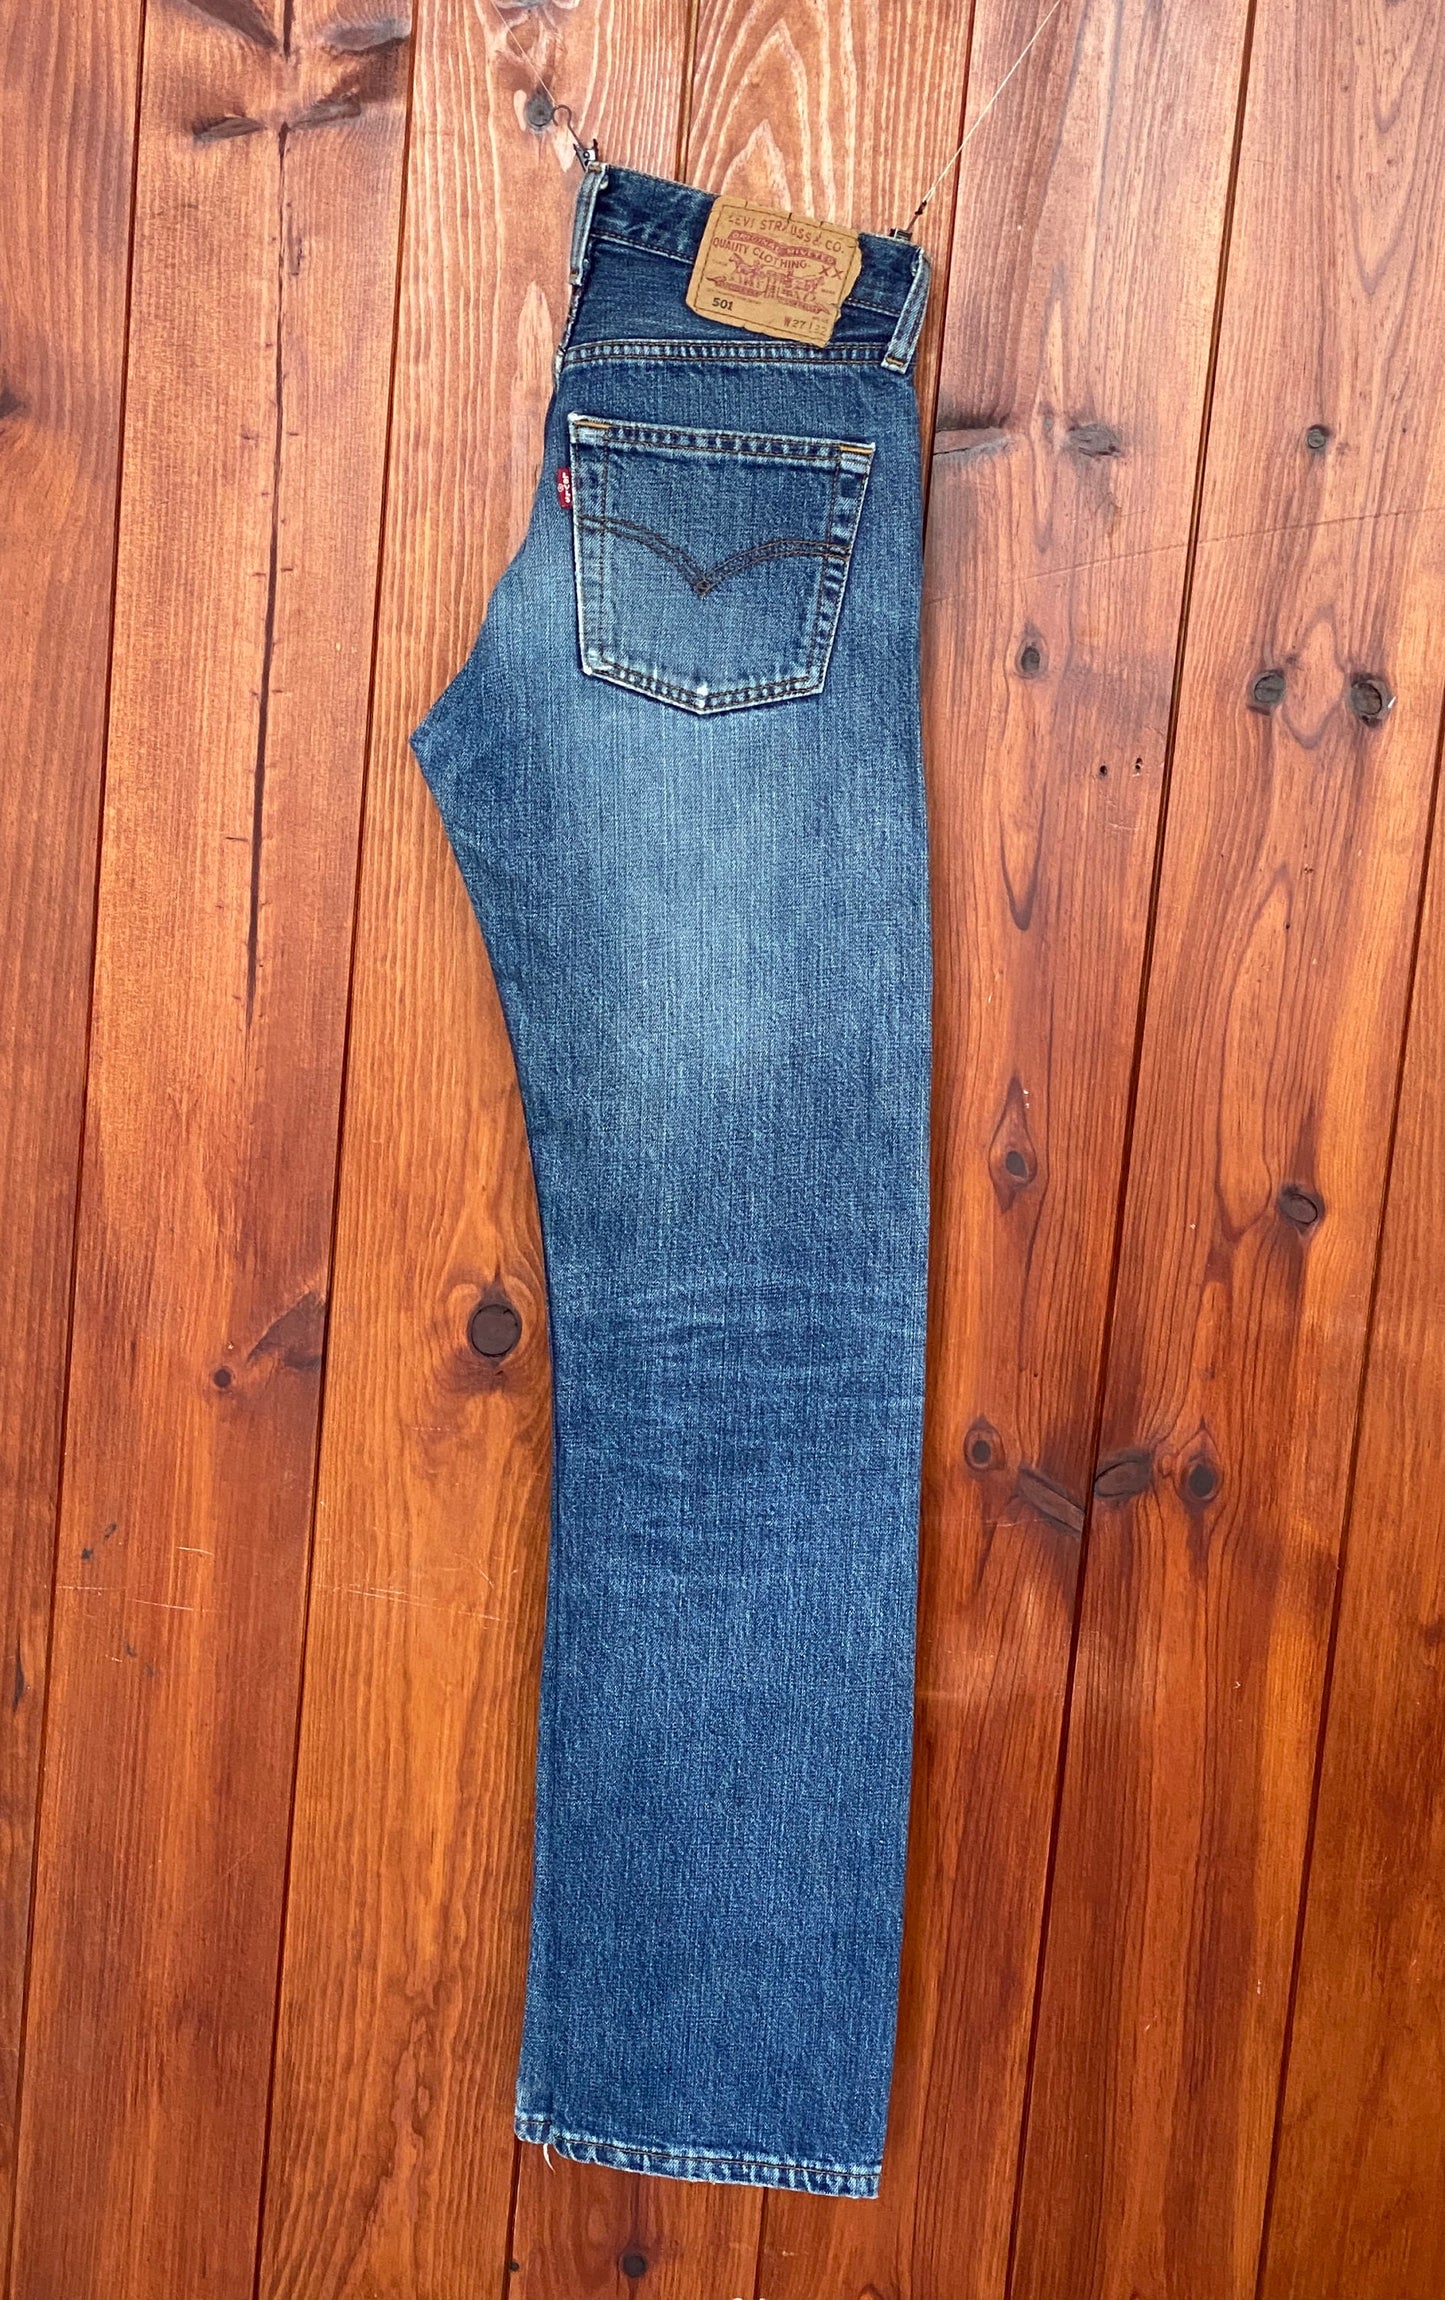 Vintage Levi's 501 Jeans 27X32 - Beautifully Distressed Classic Denim